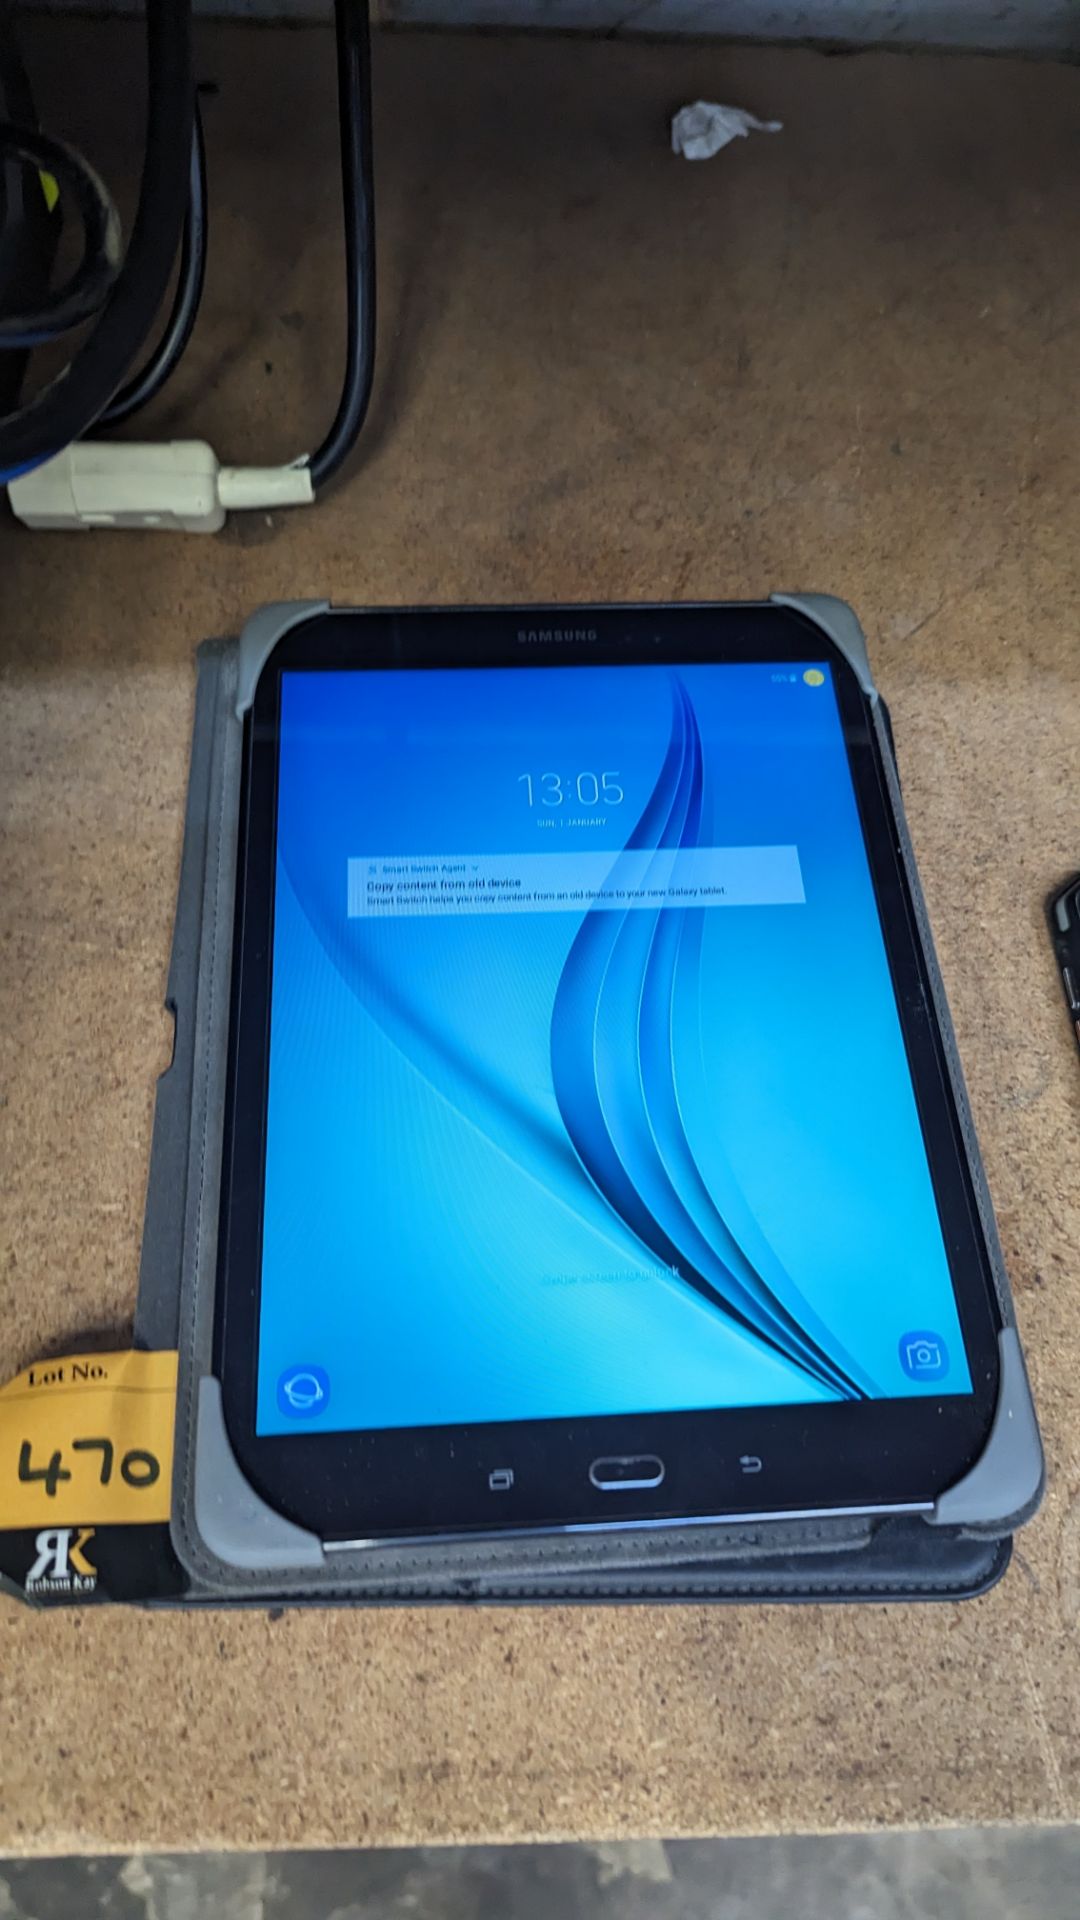 Samsung Galaxy tablet - Image 6 of 8